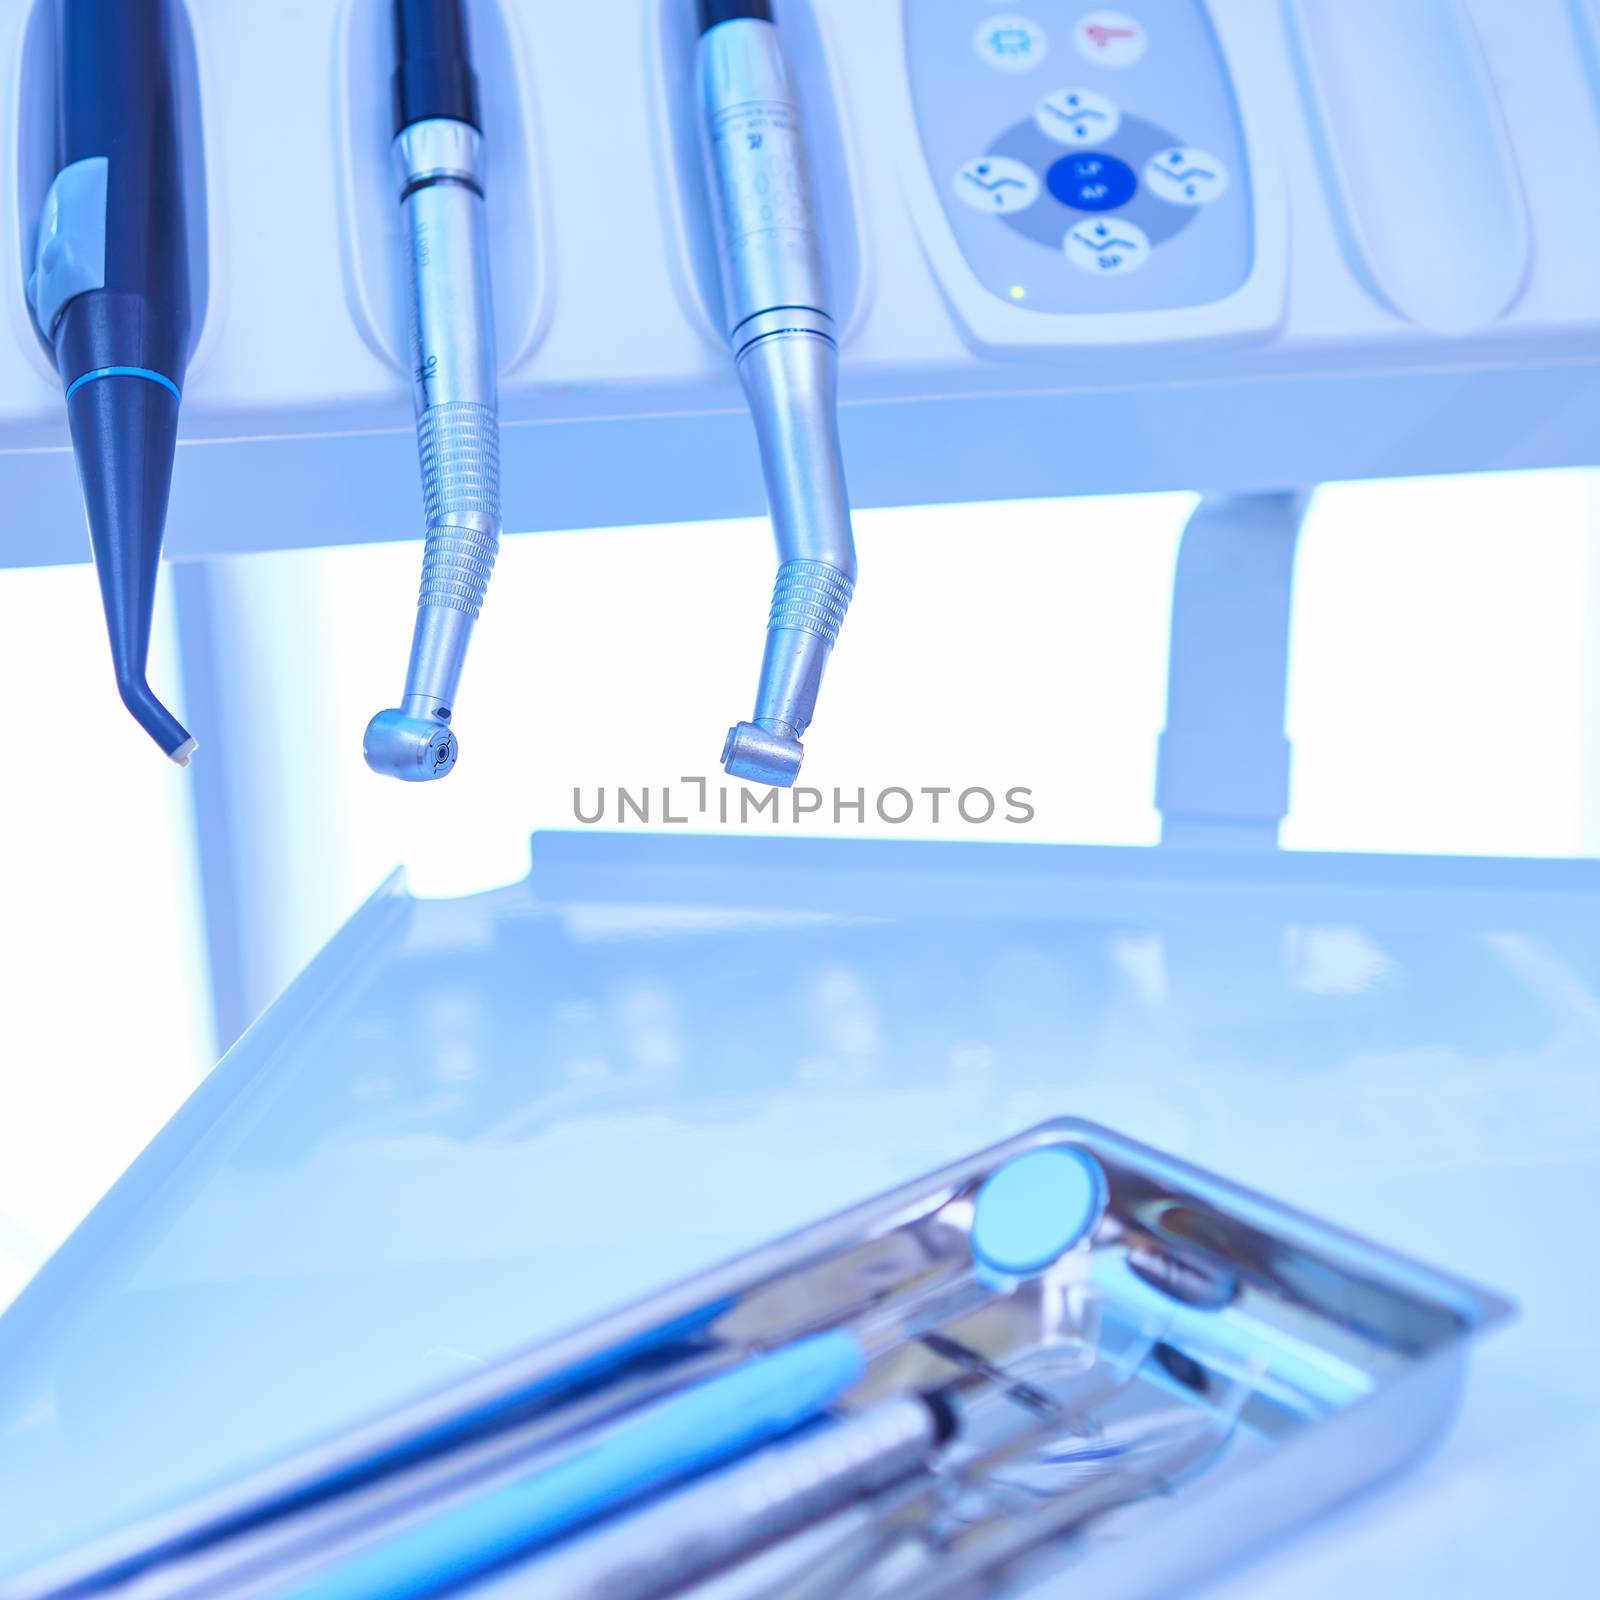 Closeup of a modern dentist tools, burnishers